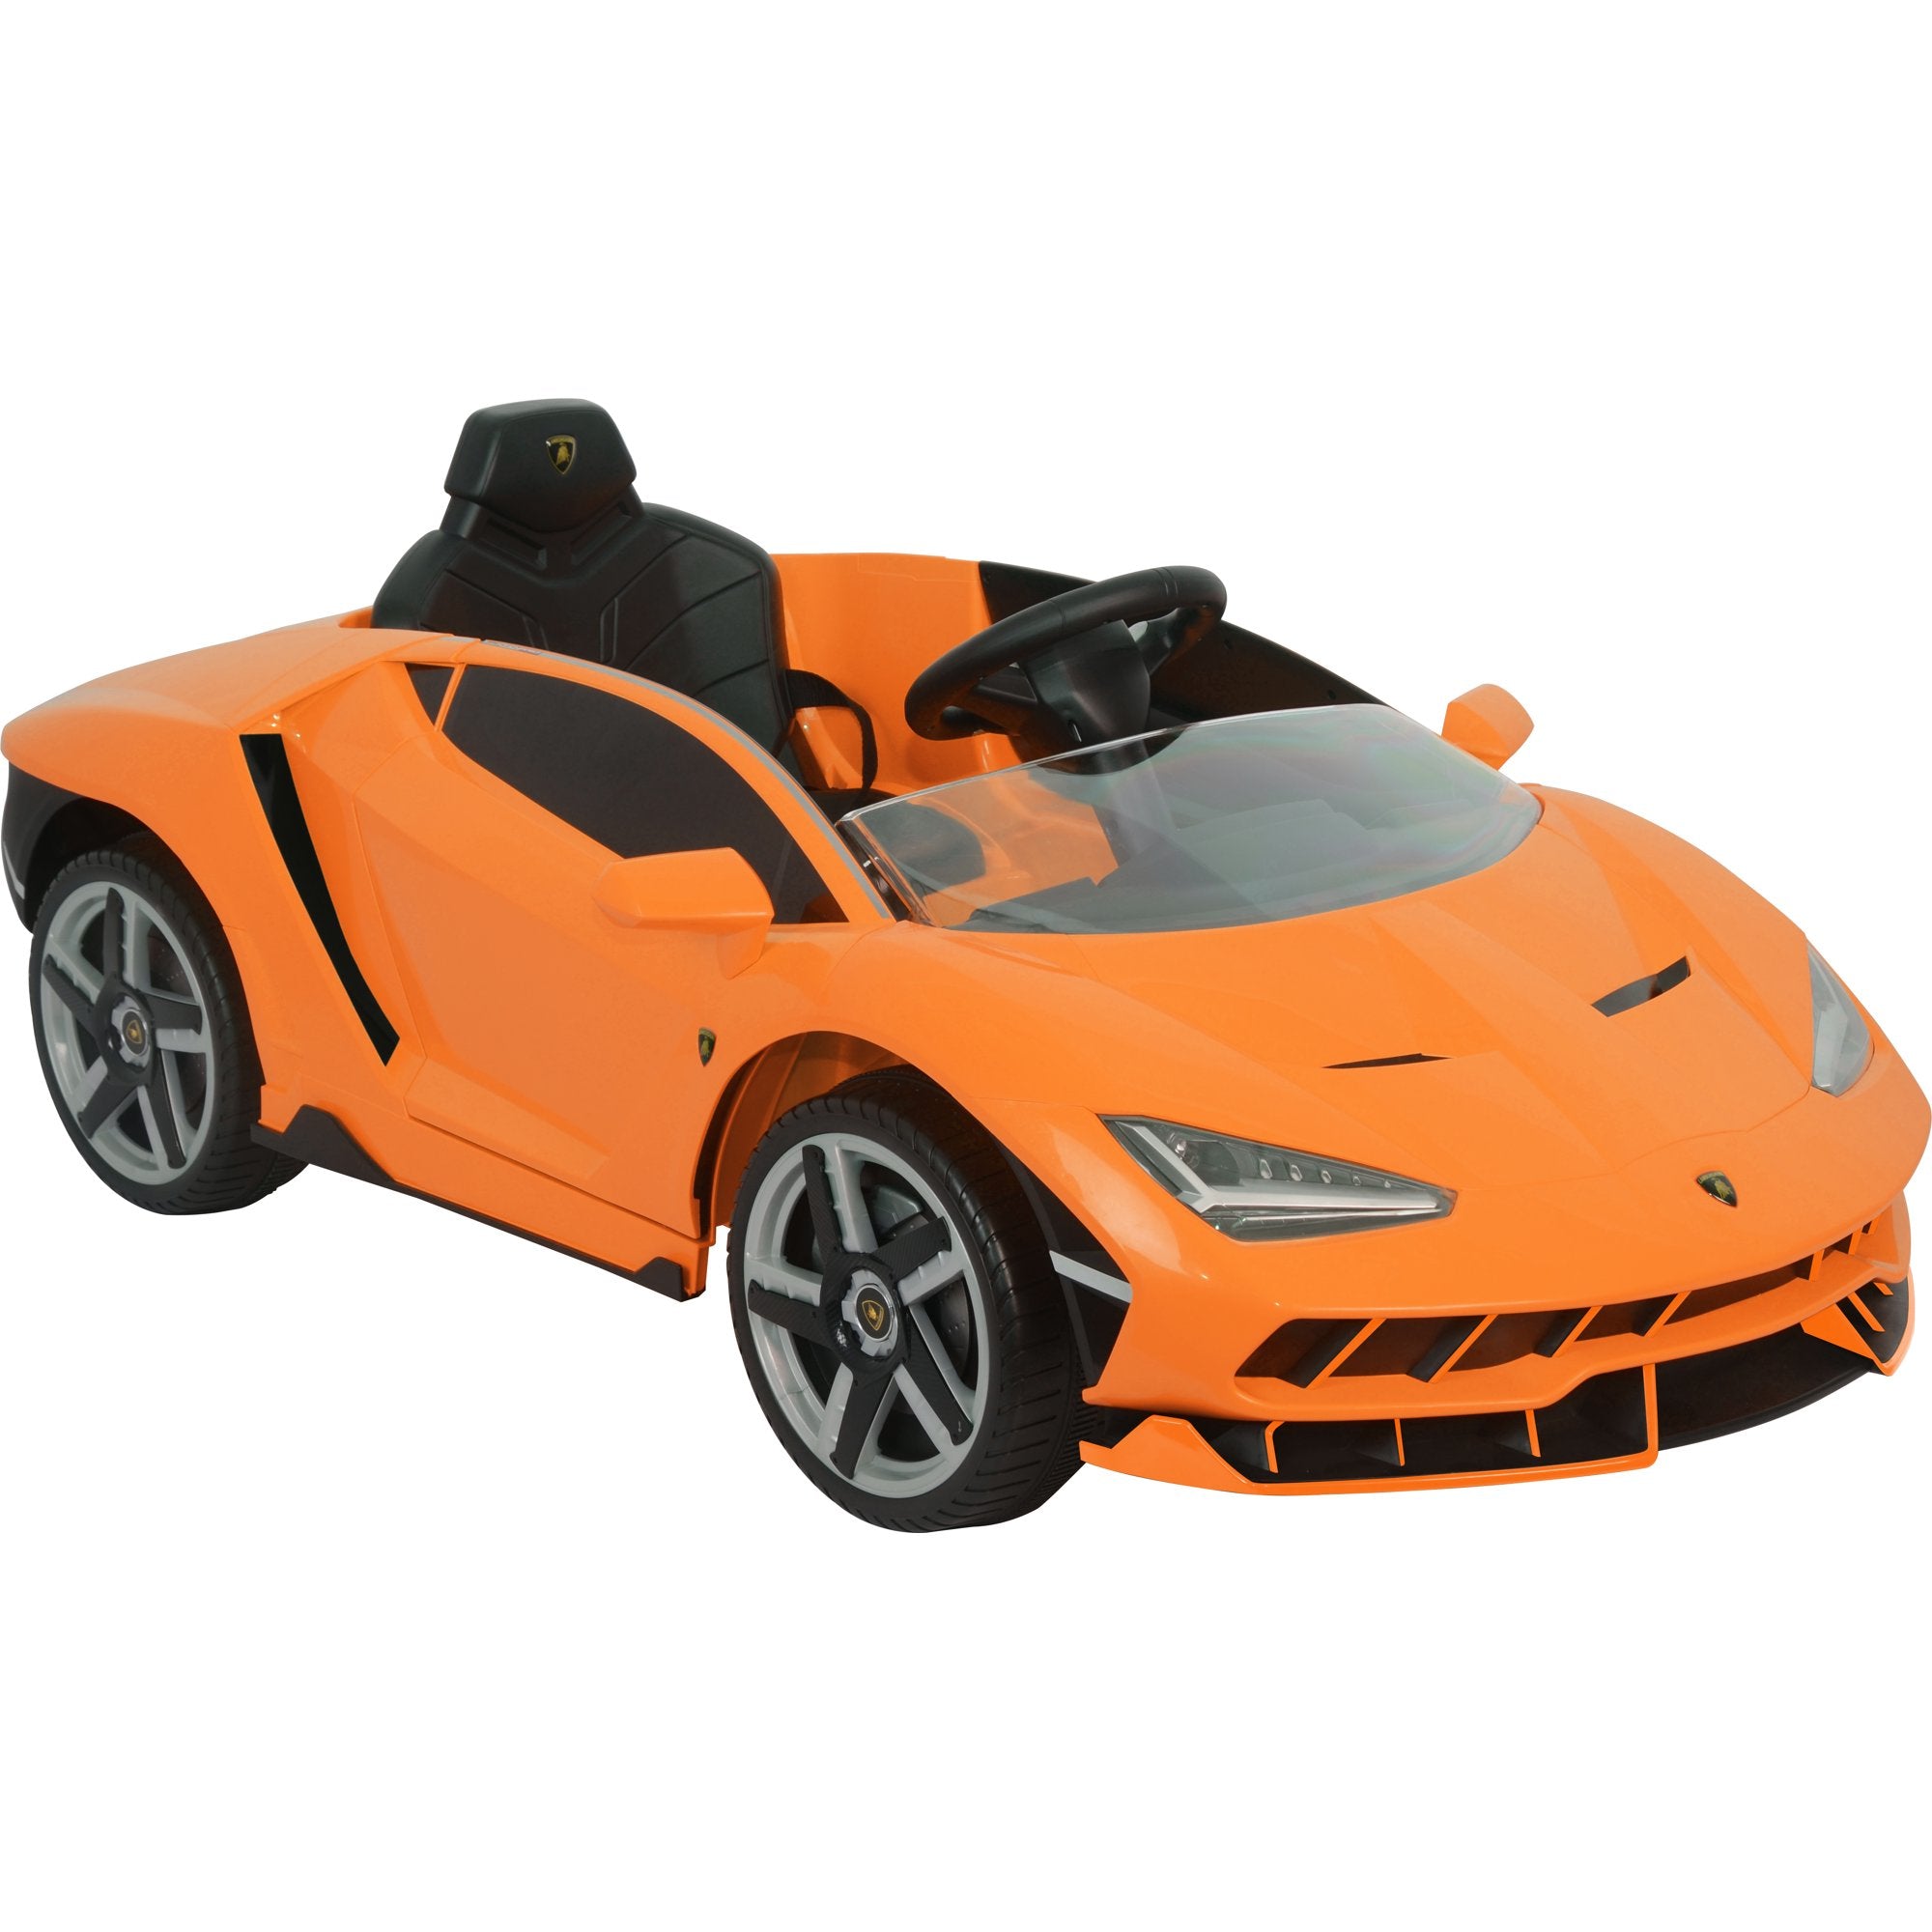 Kids Lamborghini Centenario 6726 Fully assembled & Ready to use - Orange